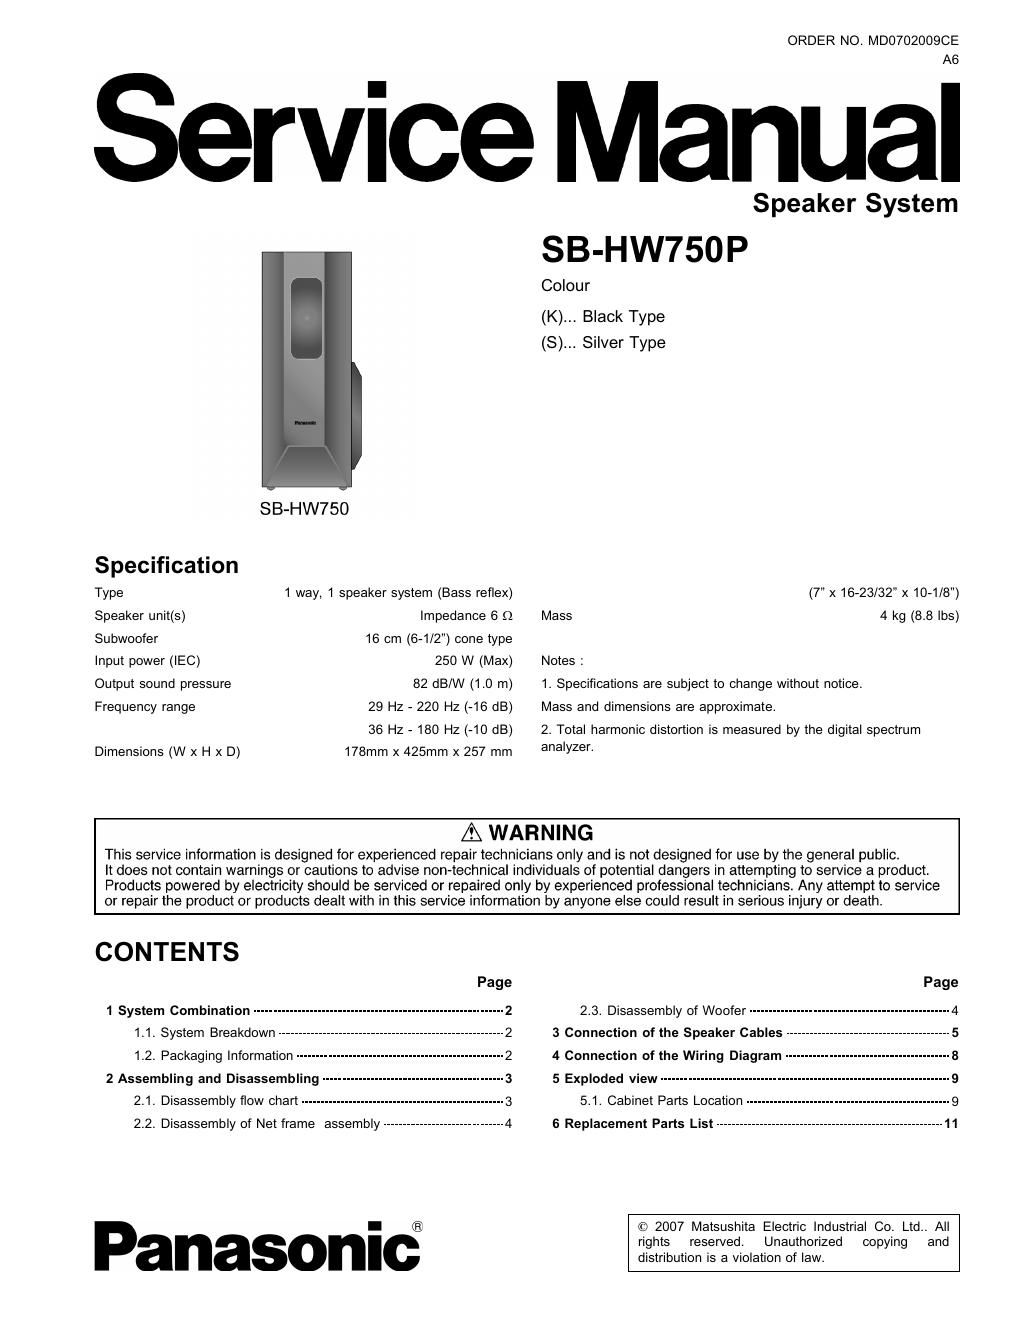 panasonic sb hw 750 p service manual